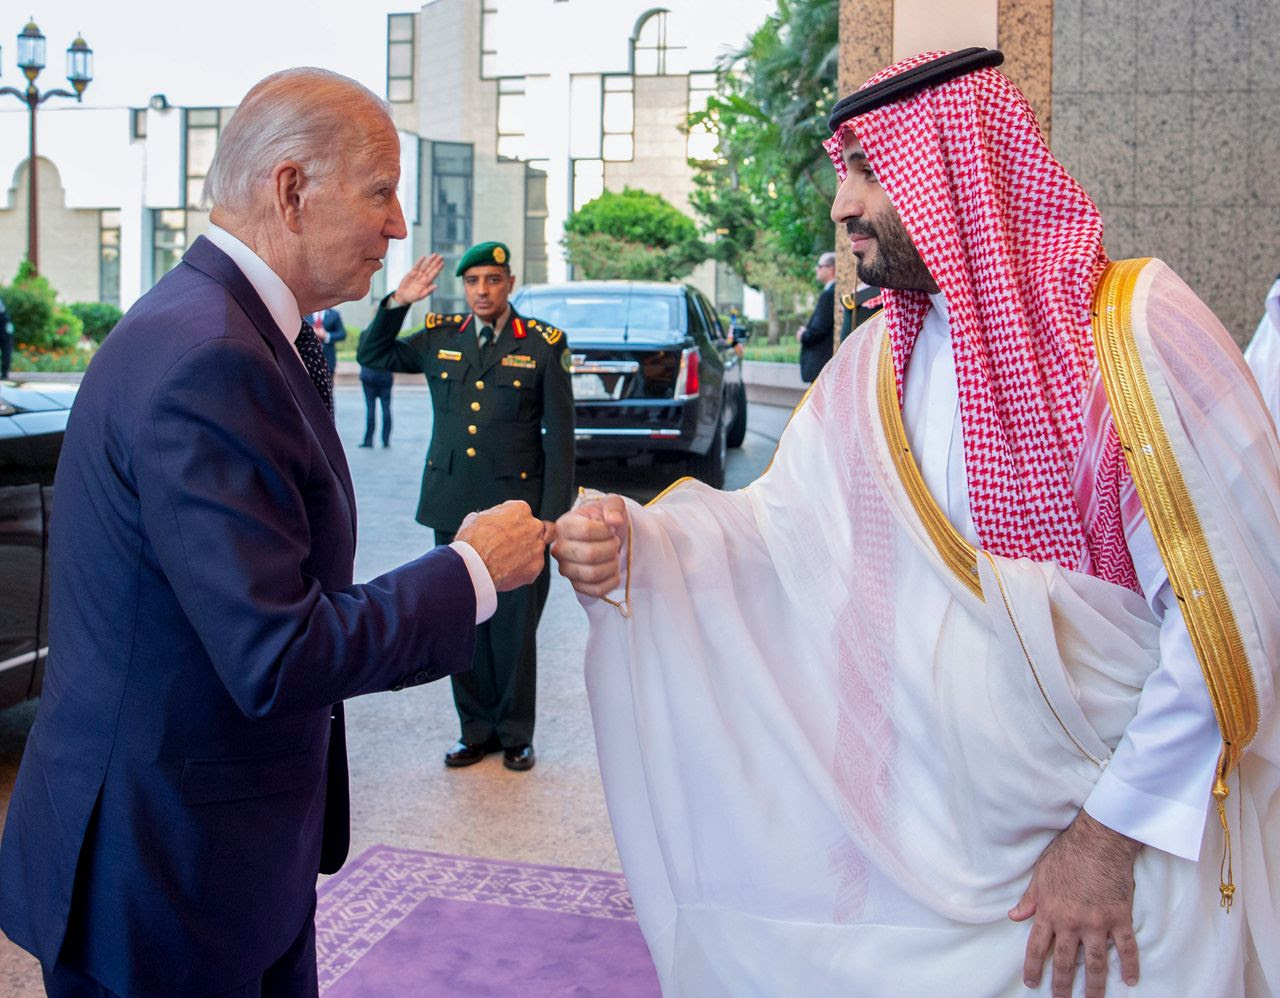 In this image released by the Saudi Royal Palace, Crown Prince Mohammed bin Salman greets President Biden at the royal palace in Jeddah, Saudi Arabia, in July 2022. (Bandar Aljaloud/Saudi Royal Palace/AP)